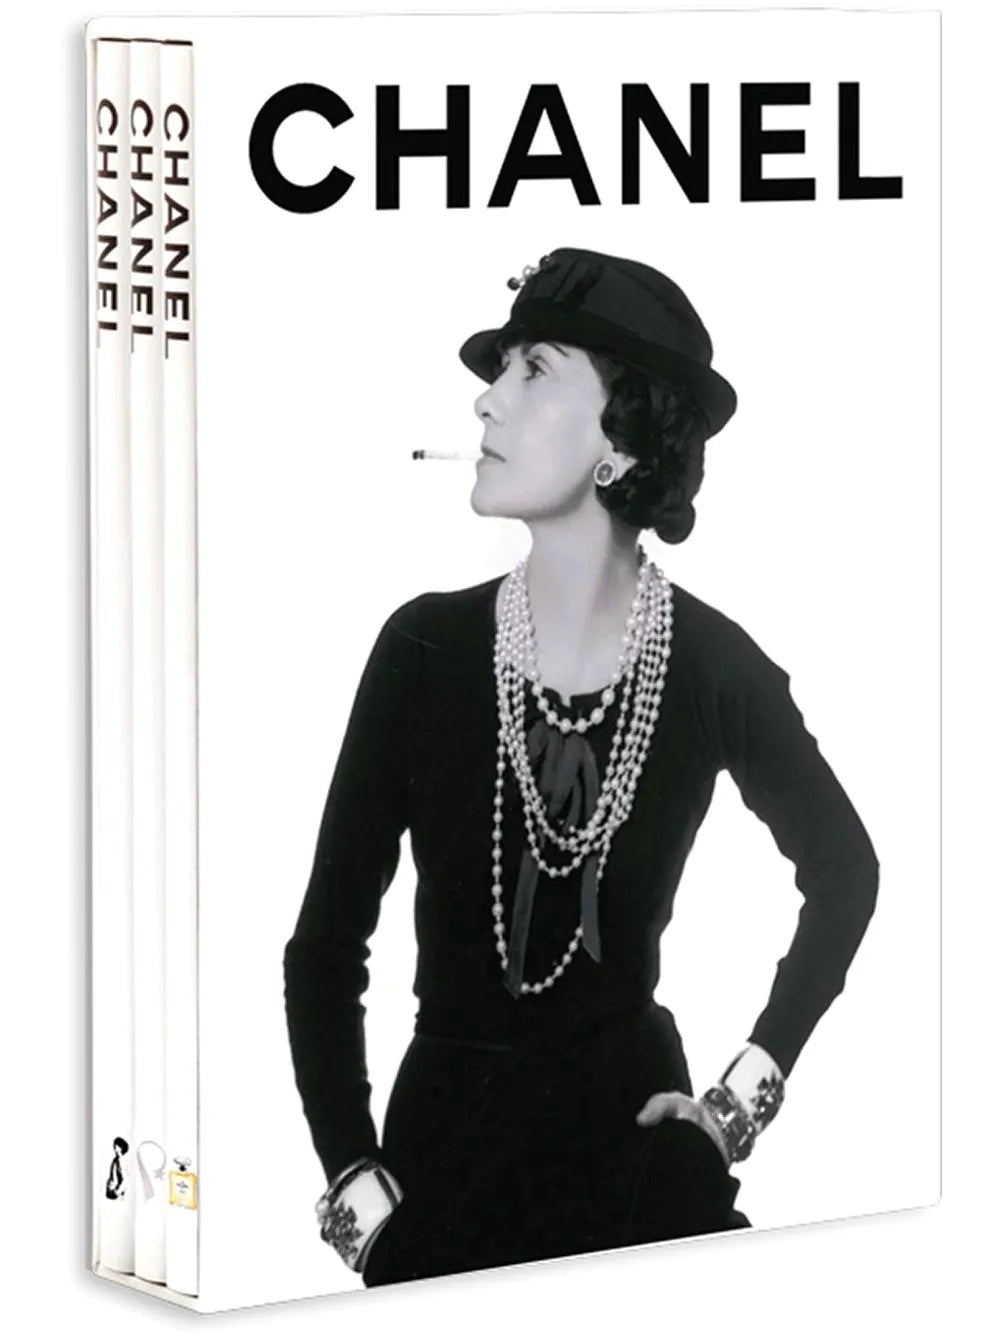 Chanel: 3 volume Set Fashion Fine Jewelry Perfume Hard Back cover Assouline  9782843235184